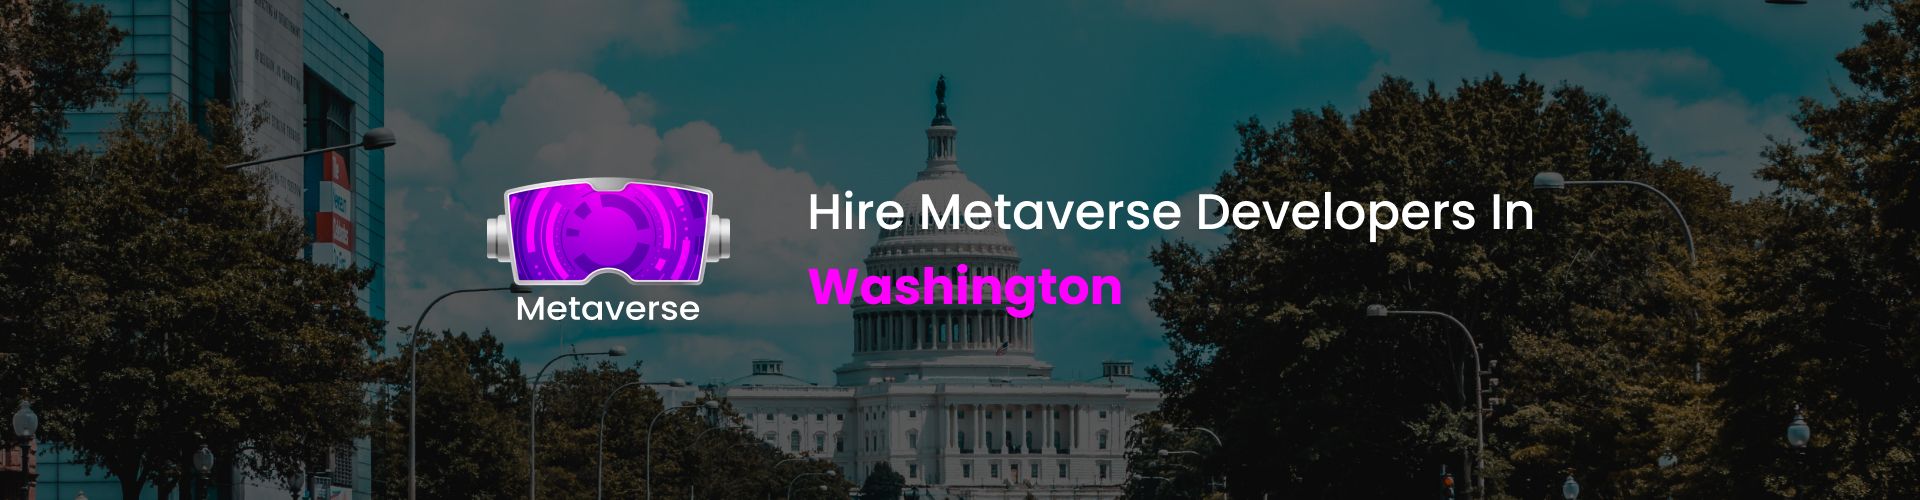 hire metaverse developers in washington